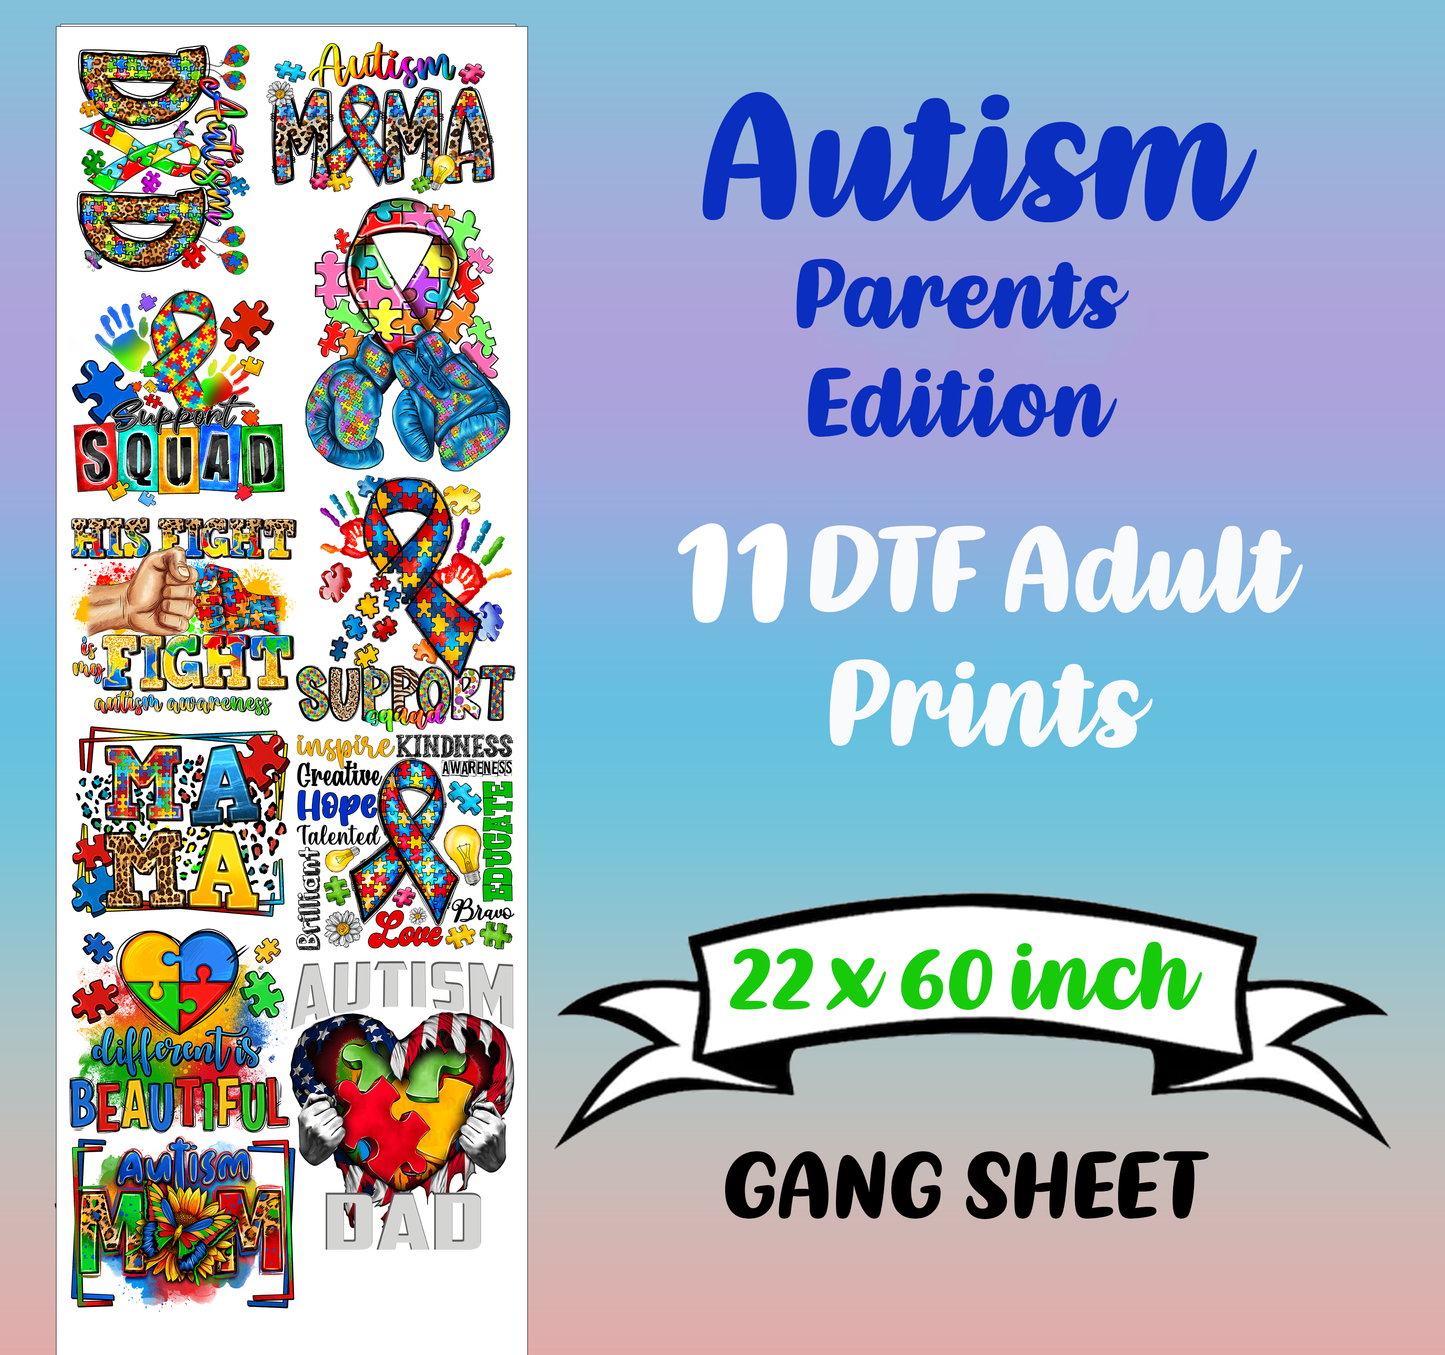 Autism Parents Edition Premade Gang sheet